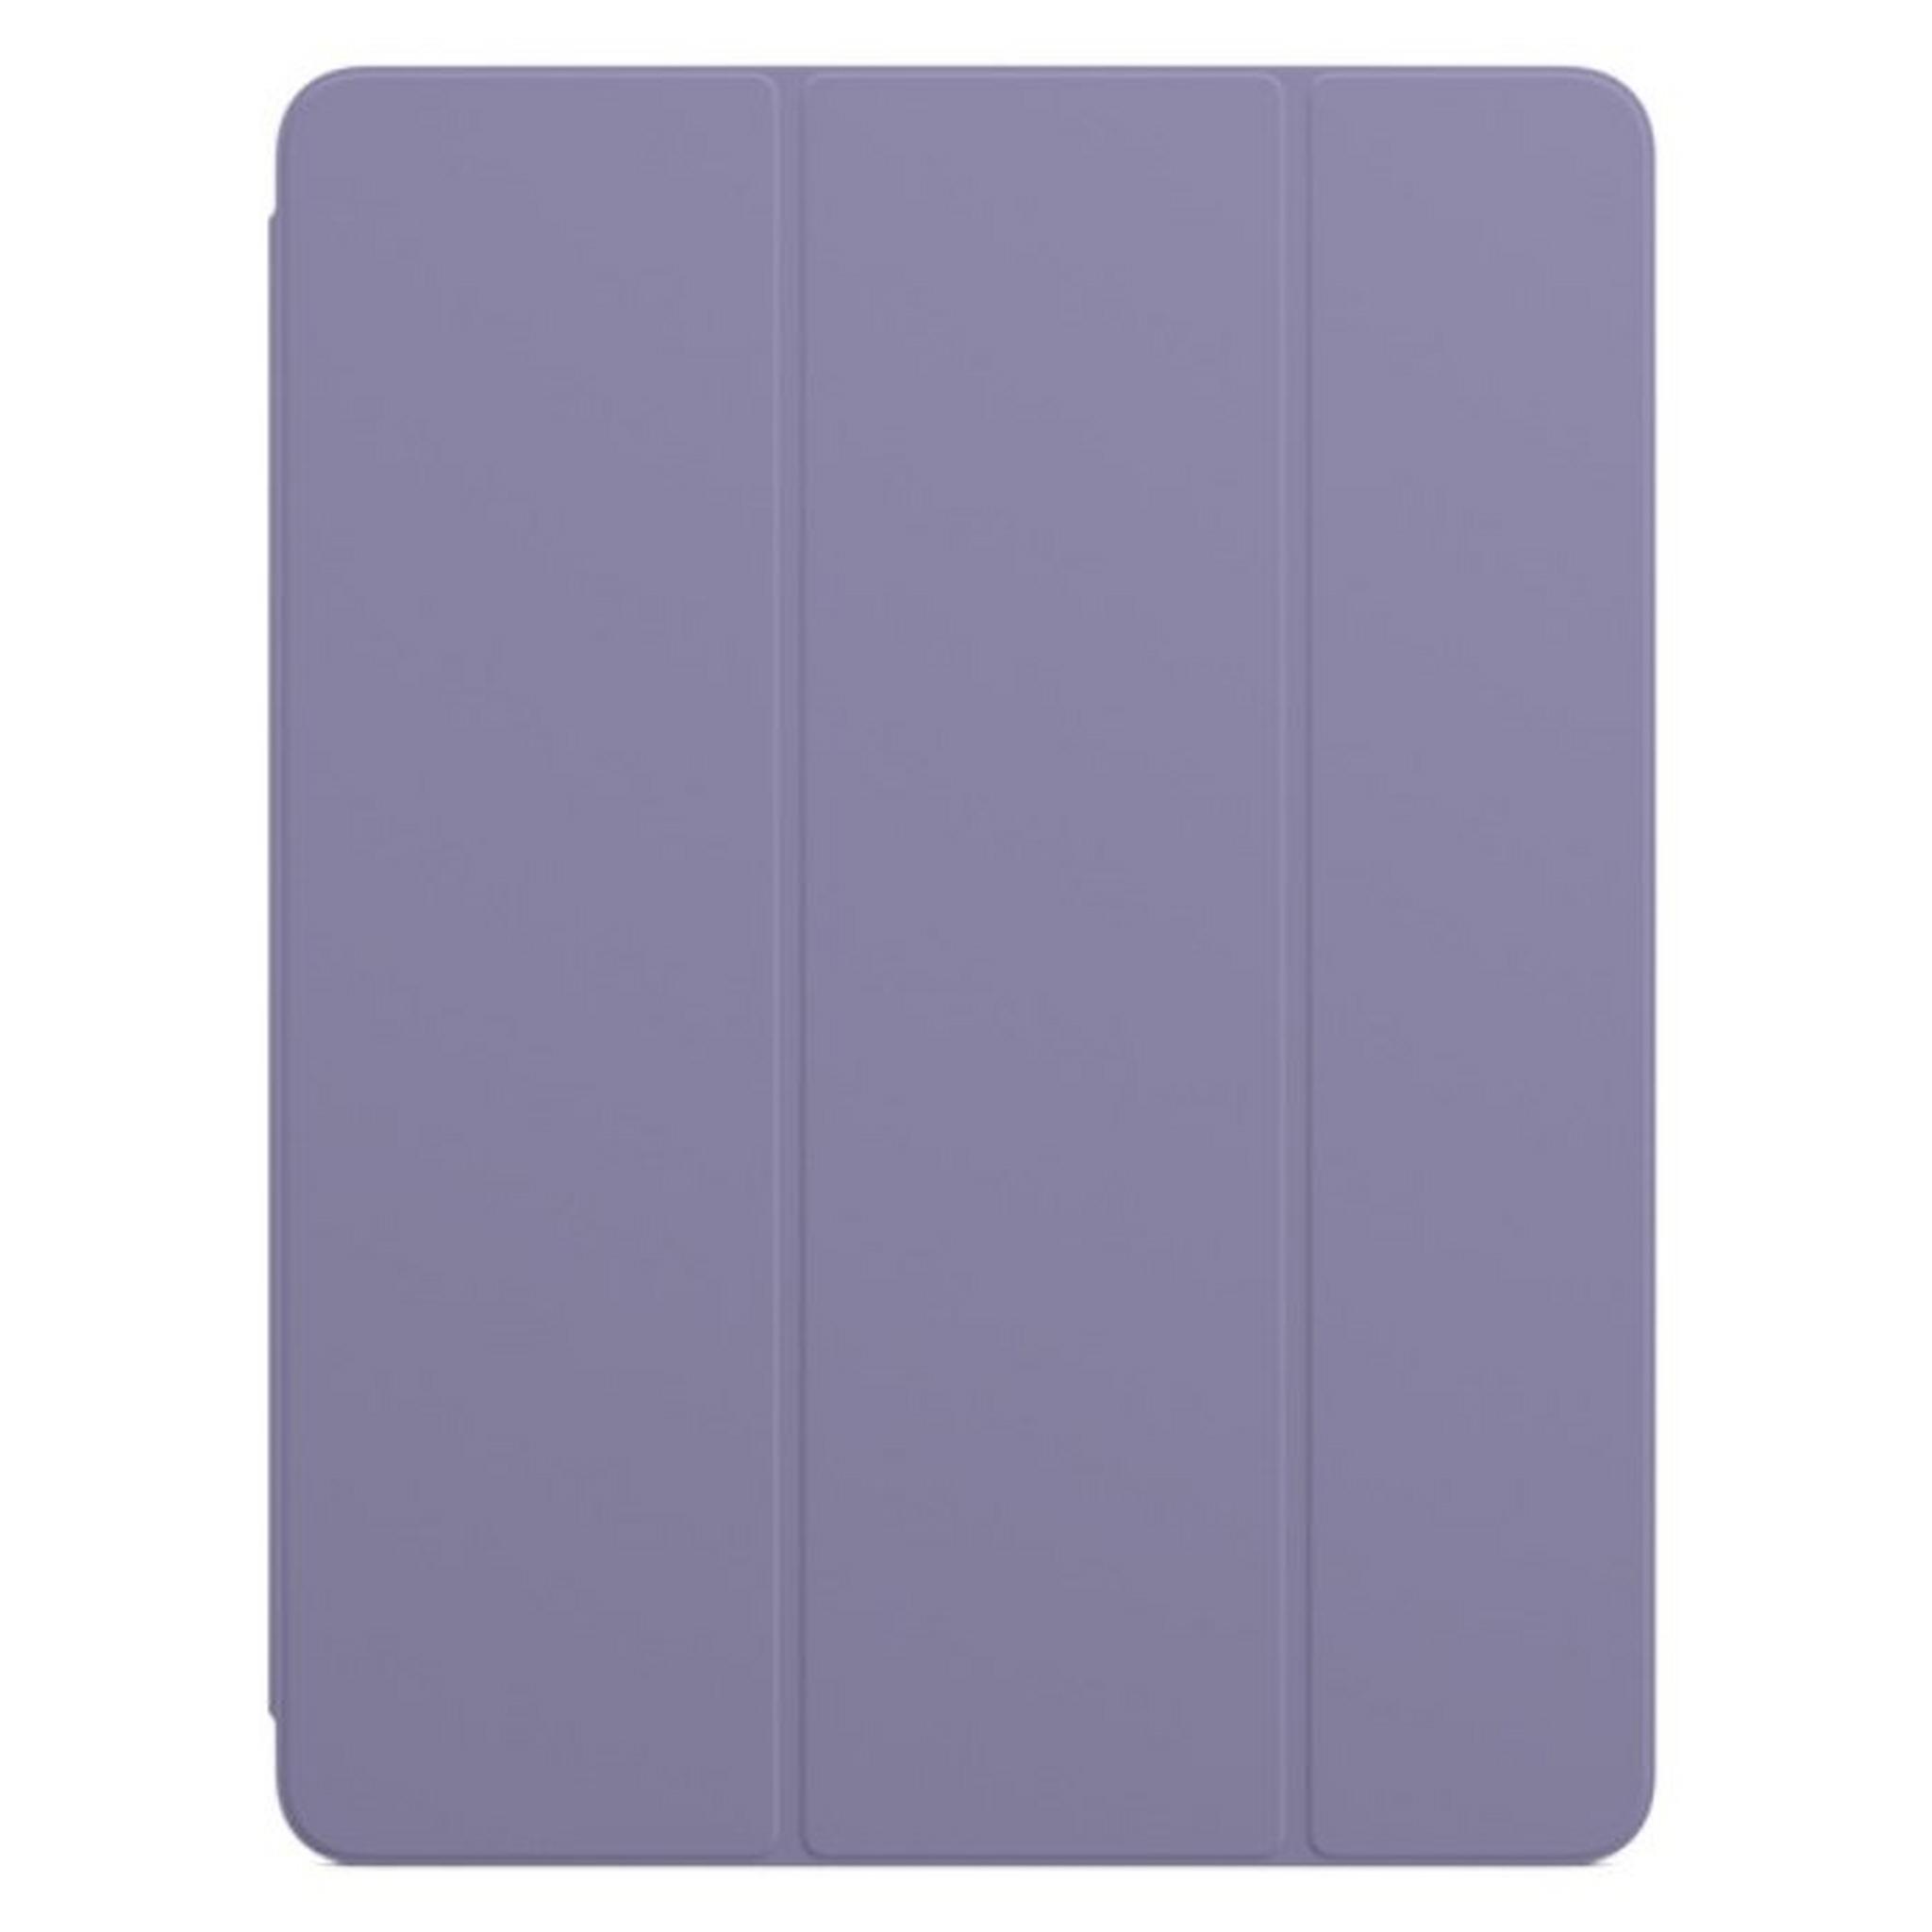 Apple Smart Folio Cover for iPad Pro 12.9-inch 5th generation - English Lavender